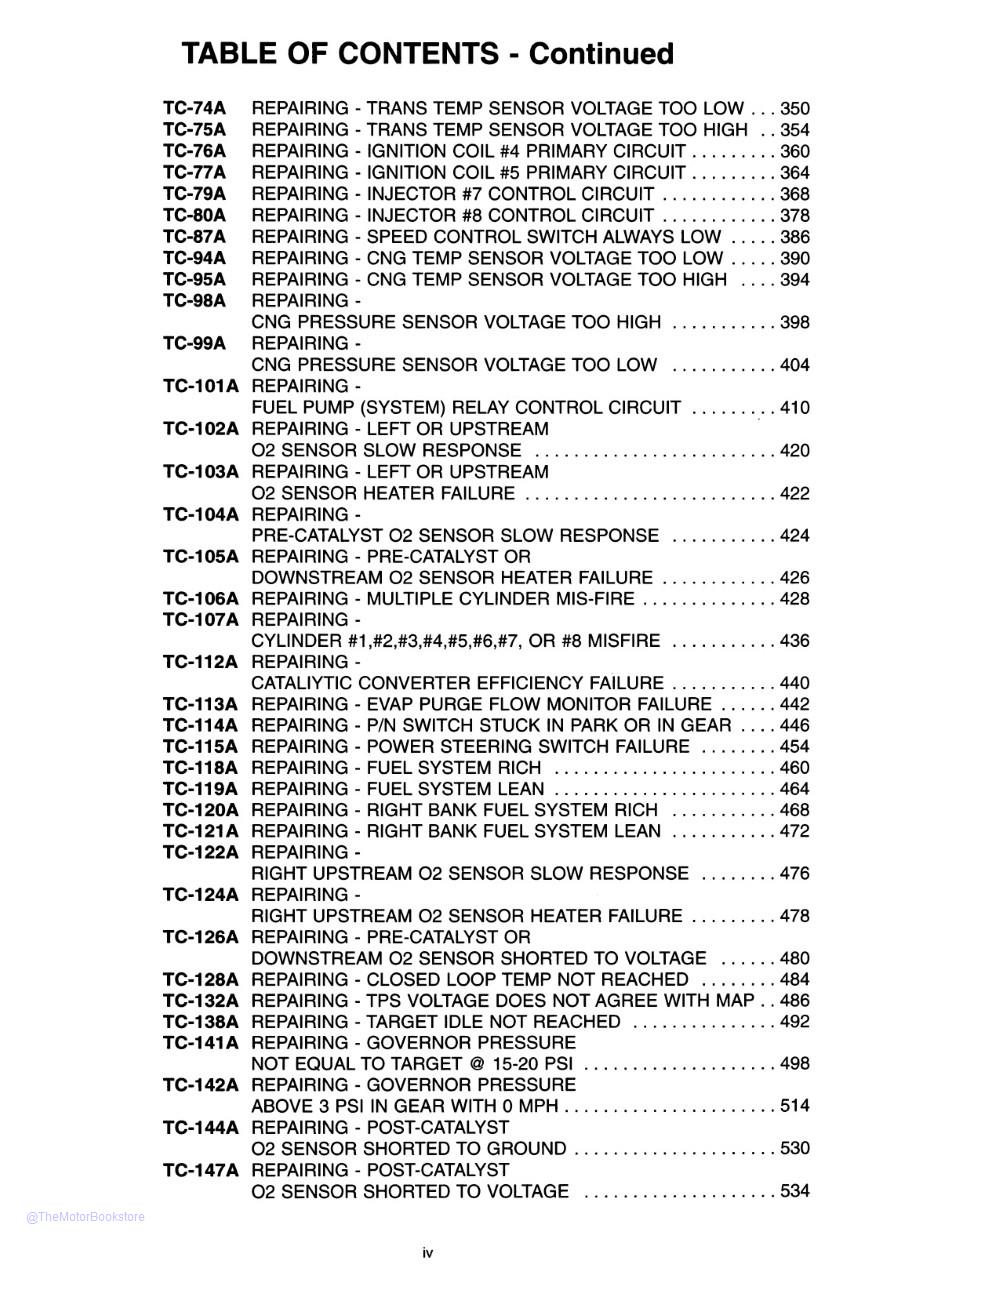 1996-1997 Dodge Truck Powertrain Diagnostic Procedures Manual  - Table of Contents 4